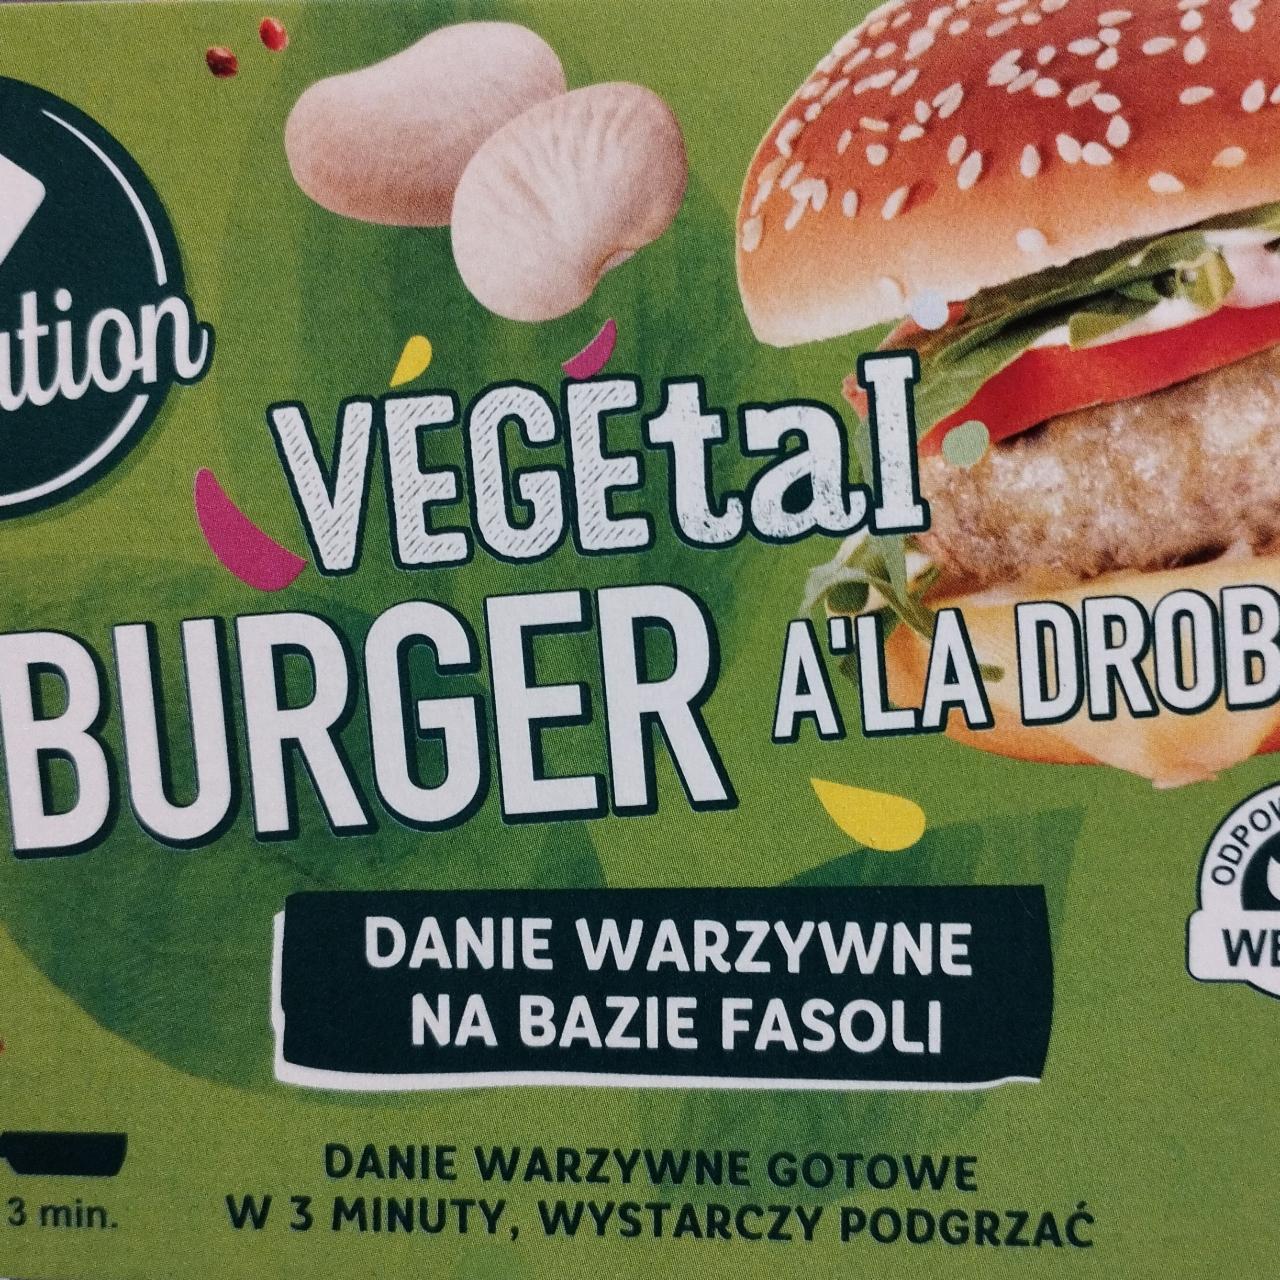 Zdjęcia - Vegetal Burger A'la drobiowy Carrefour